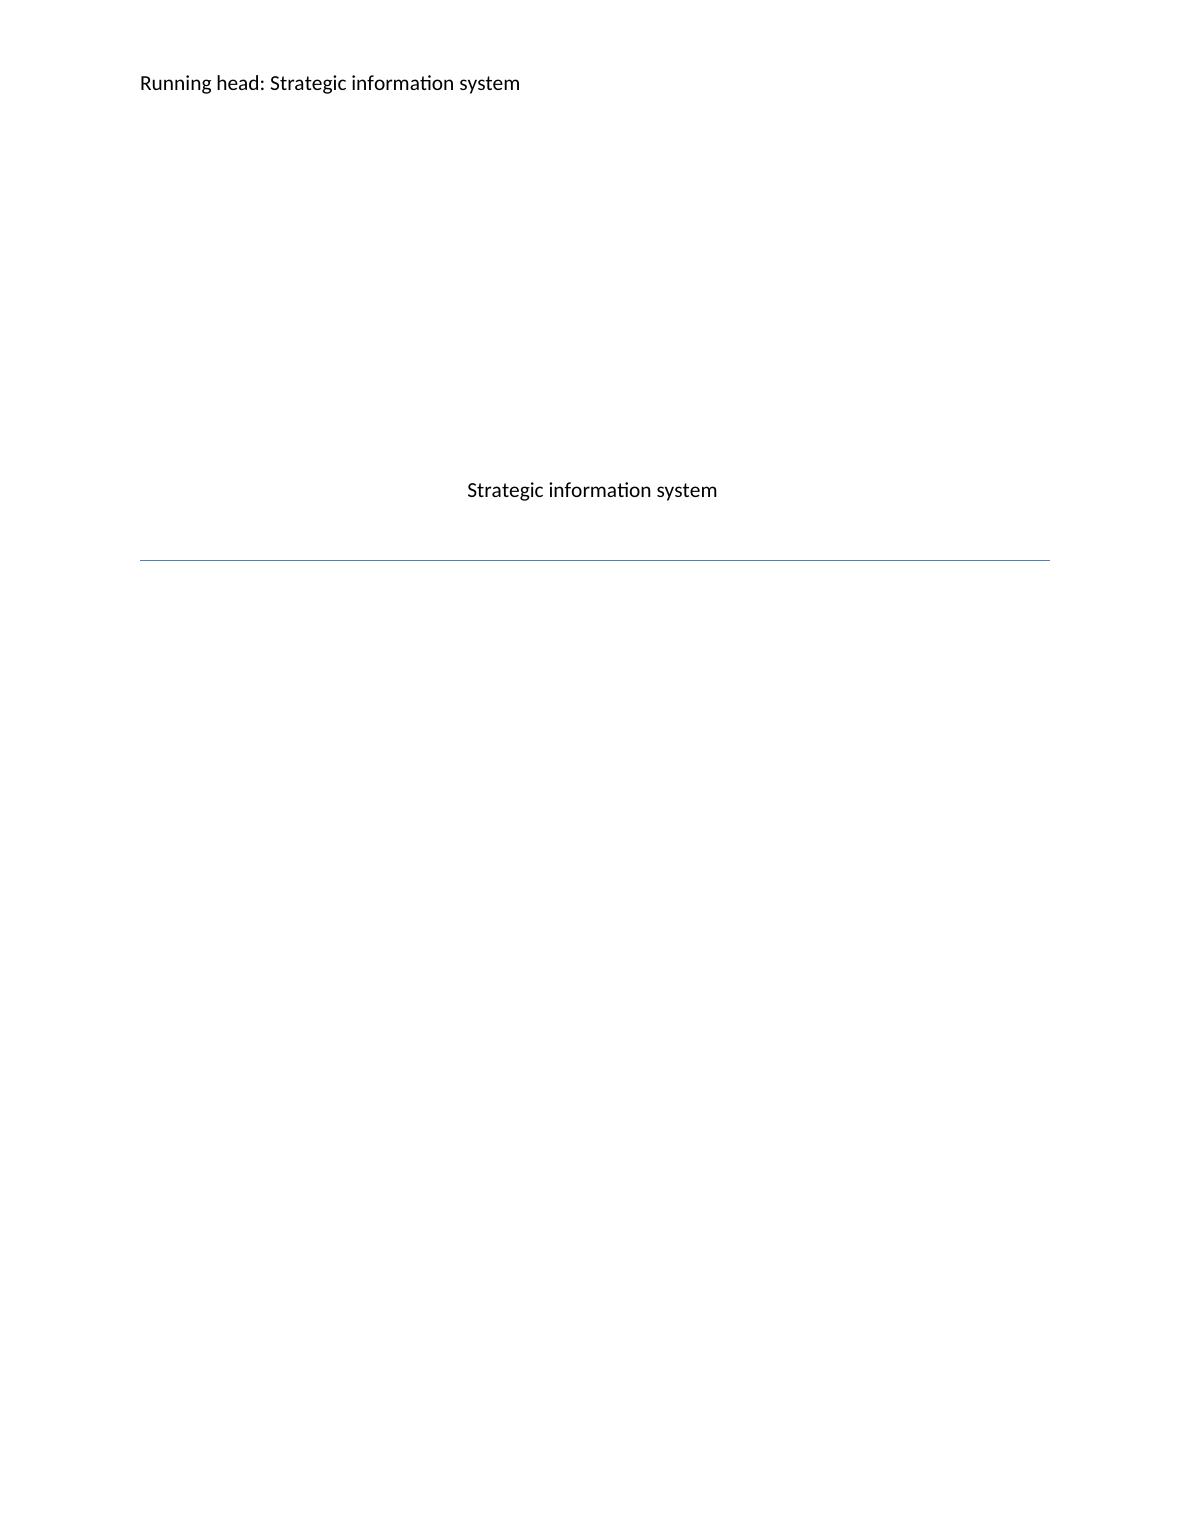 Strategic information system   -  Sample Assignment PDF_1